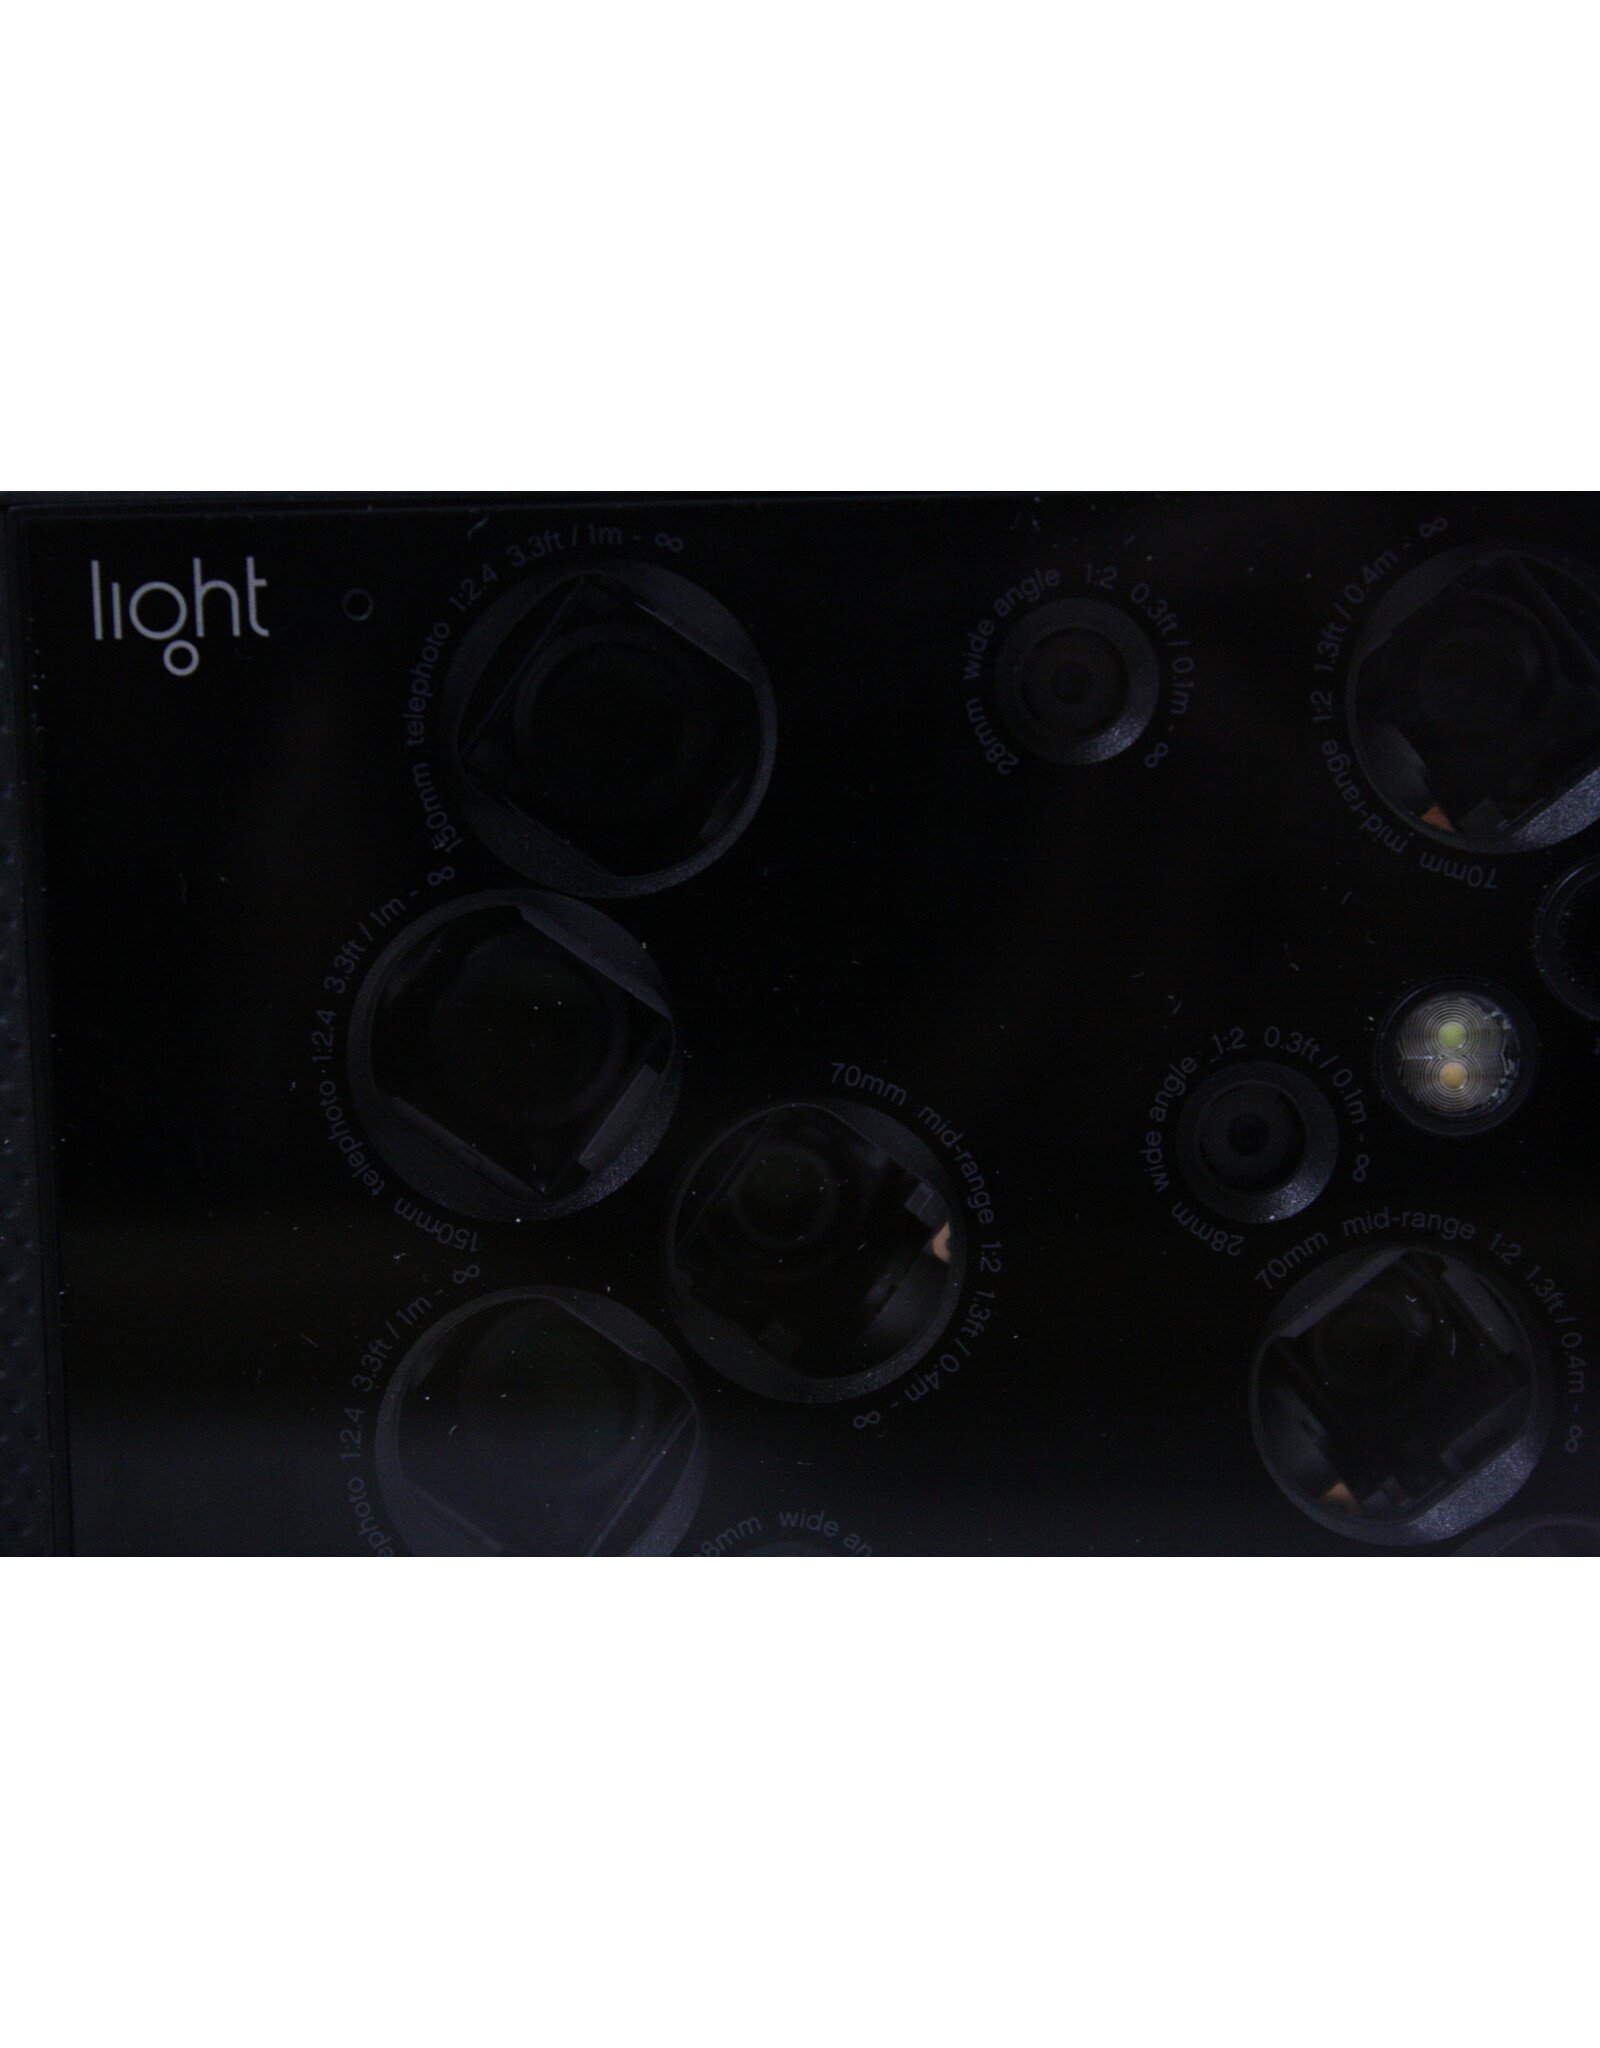 Light Camera L16 51.1MP 16 Lenses & Sensors 8256 x 6192 MINT Condition NEW IN BOX